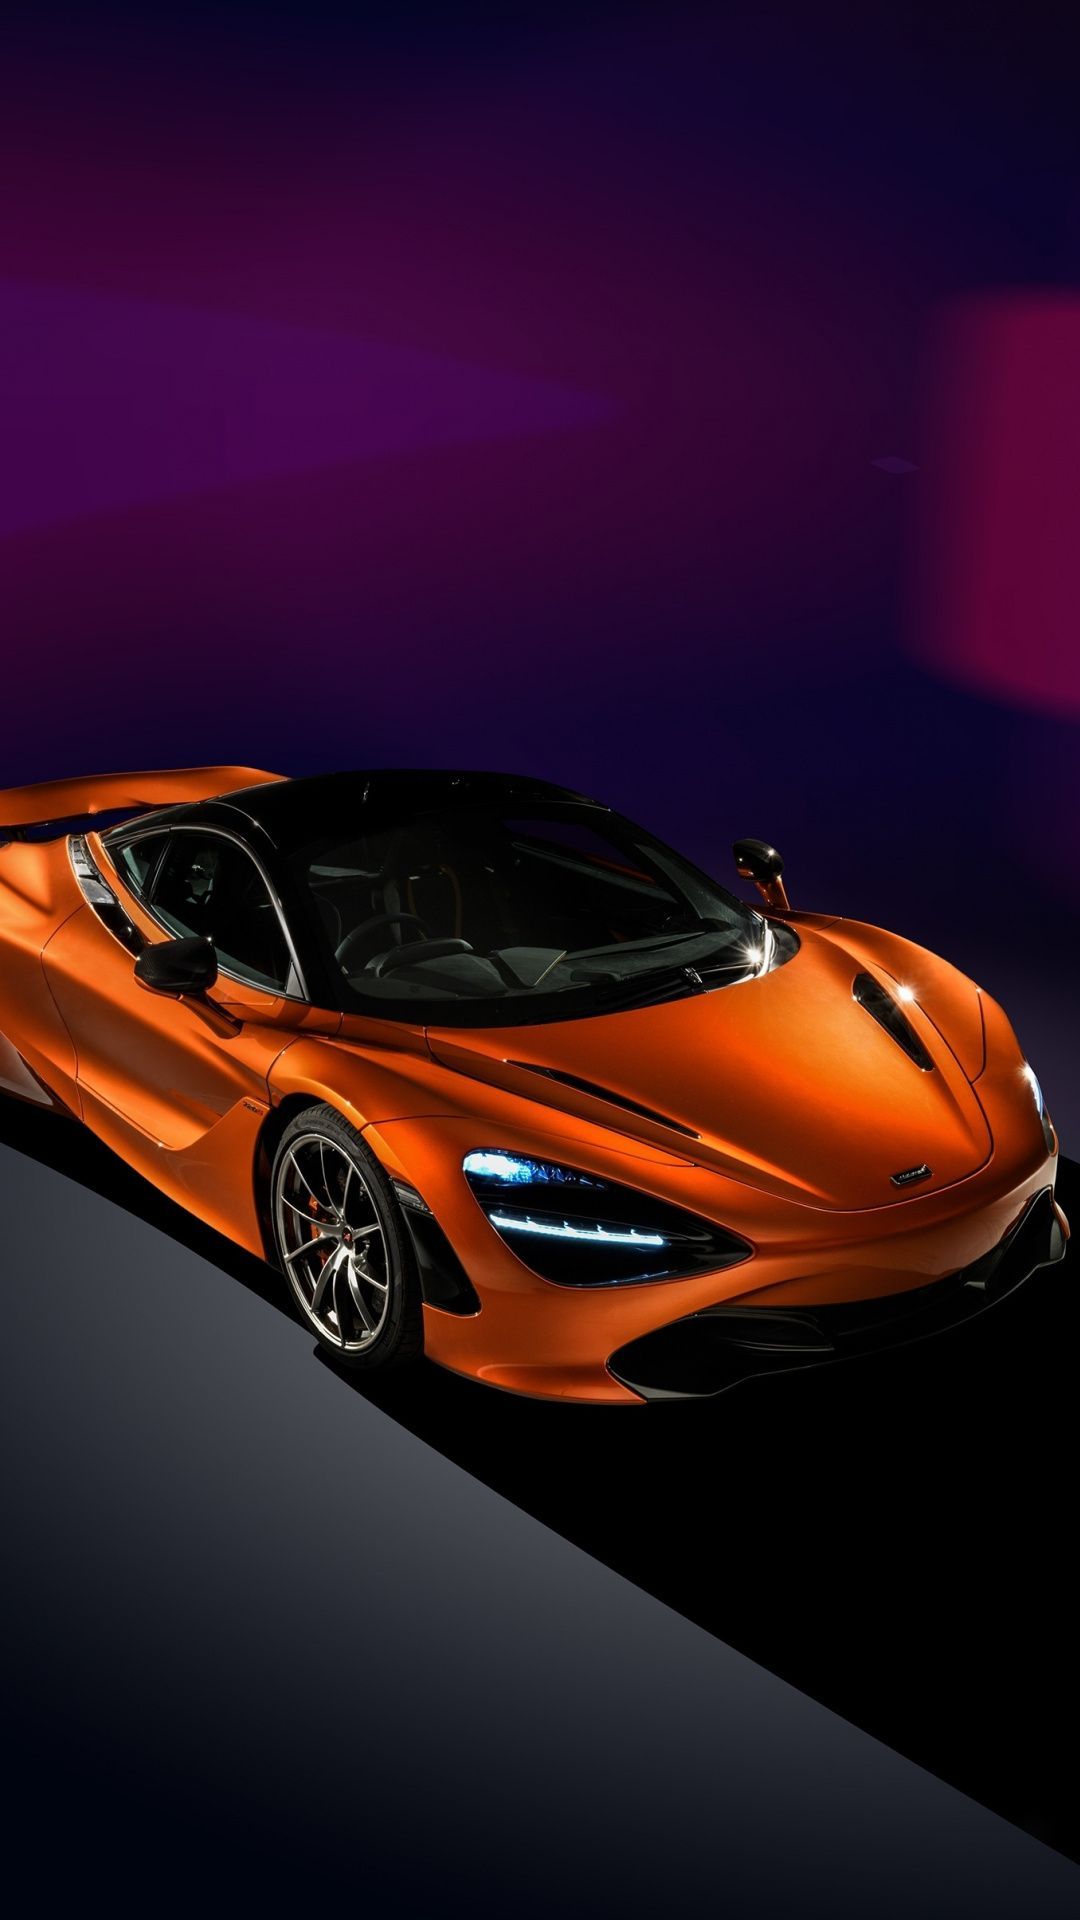 McLaren 720S, sports car, orange, 1080x1920 wallpaper di 2020. Mobil sport, Mobil